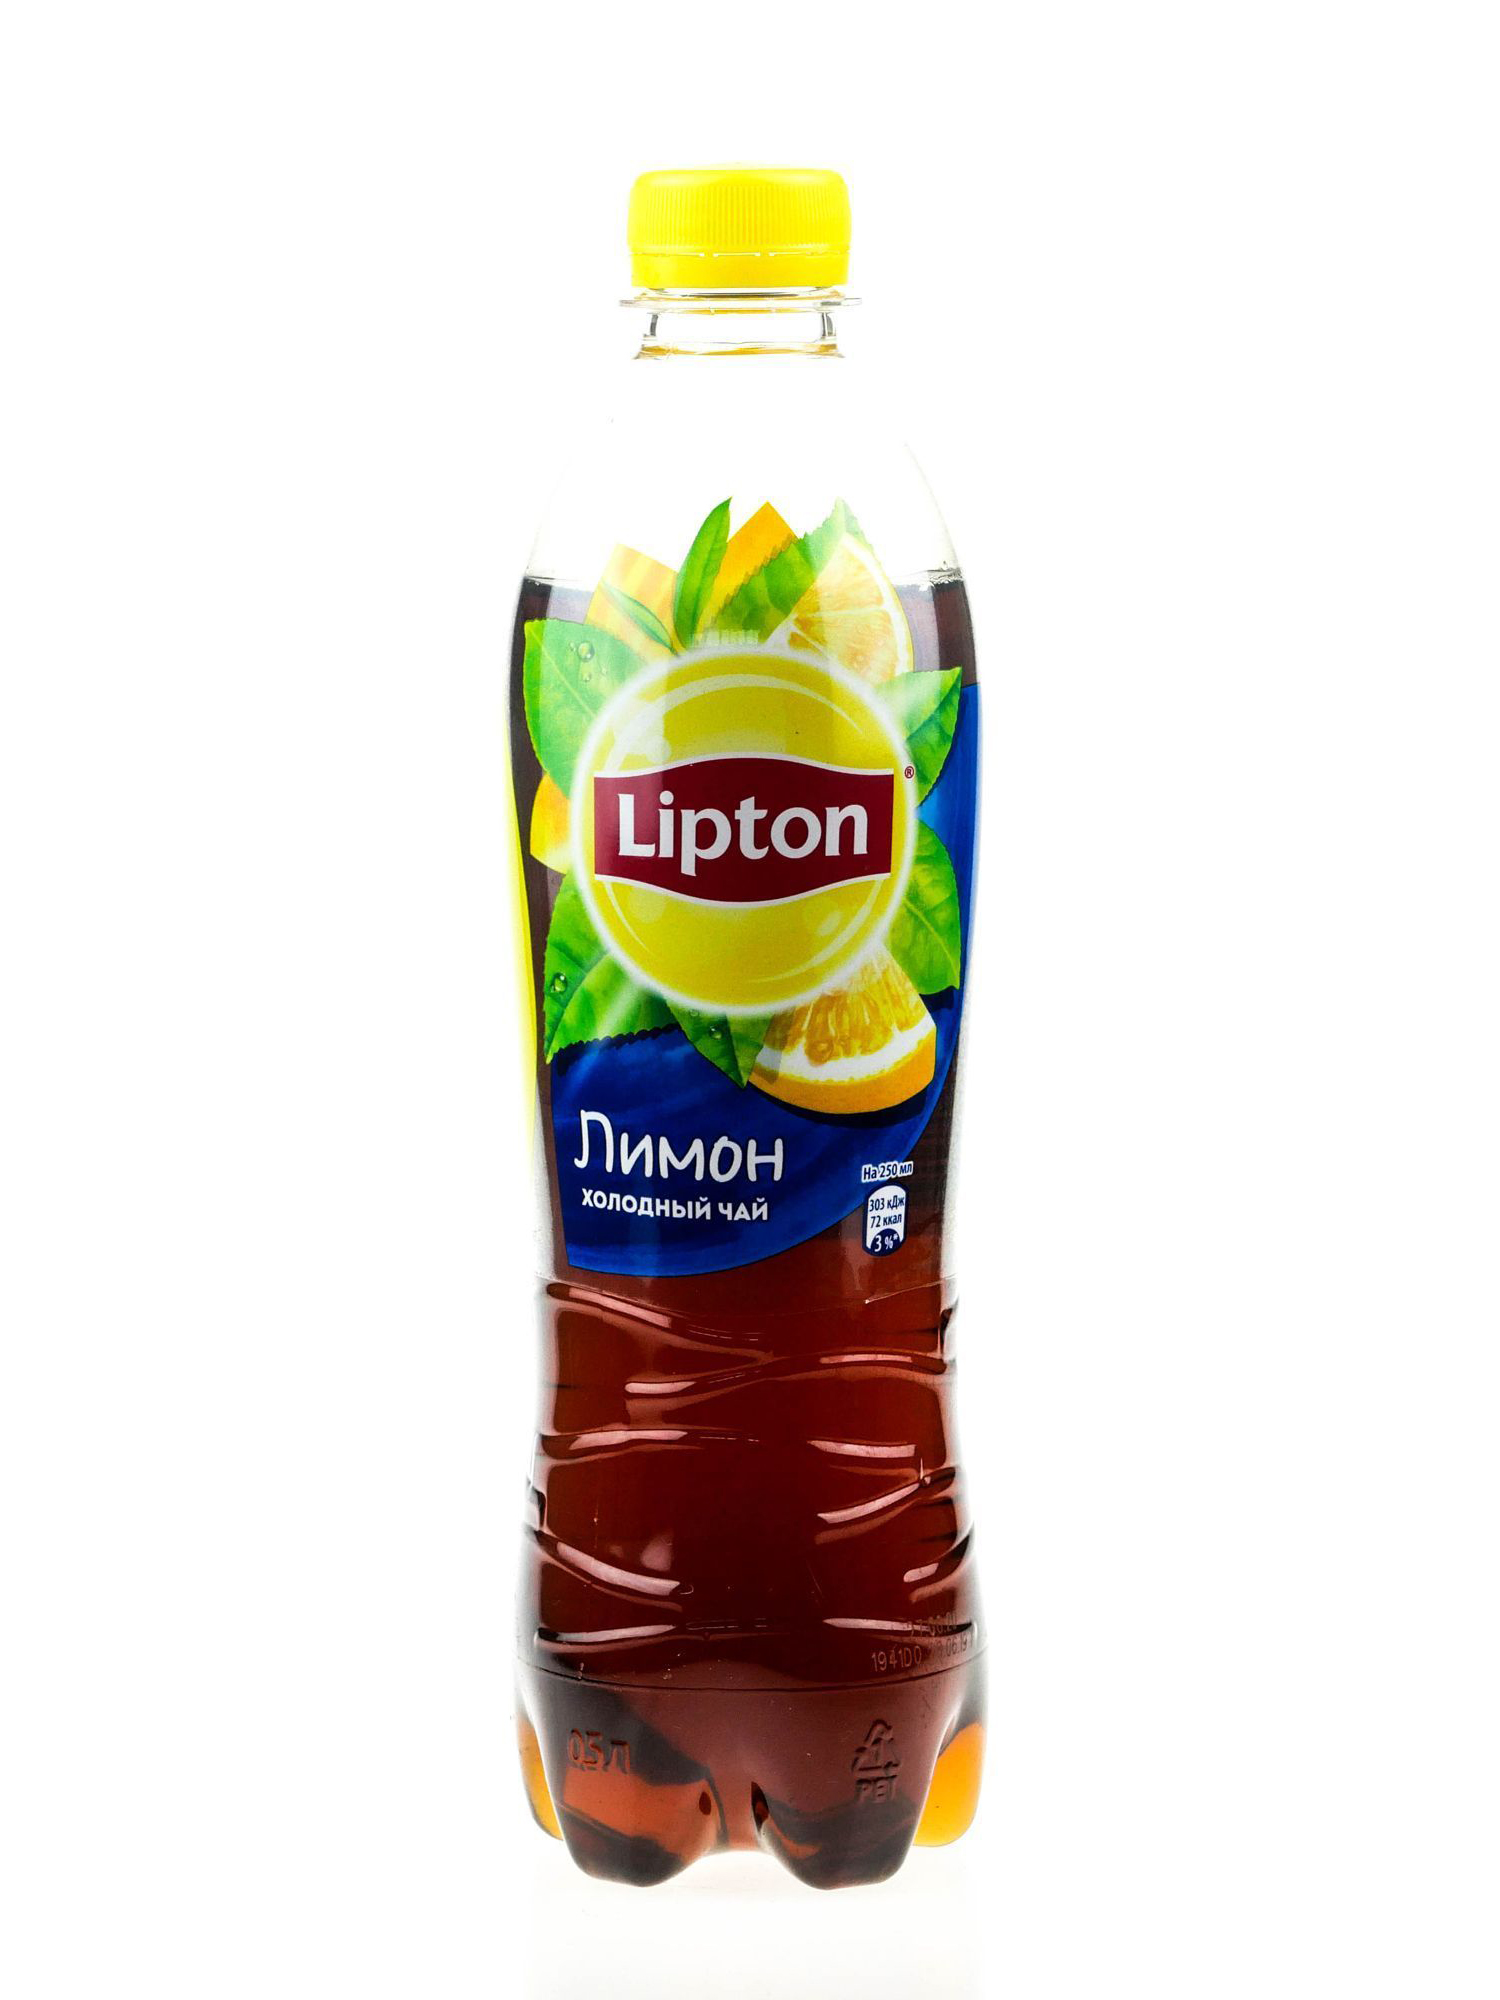 Картинки липтона. Чай Липтон холодный лимон 0,5л. Напиток Липтон холодный чай черный. Липтон черный с лимоном 0.5. Липтон 0,5 лимон.